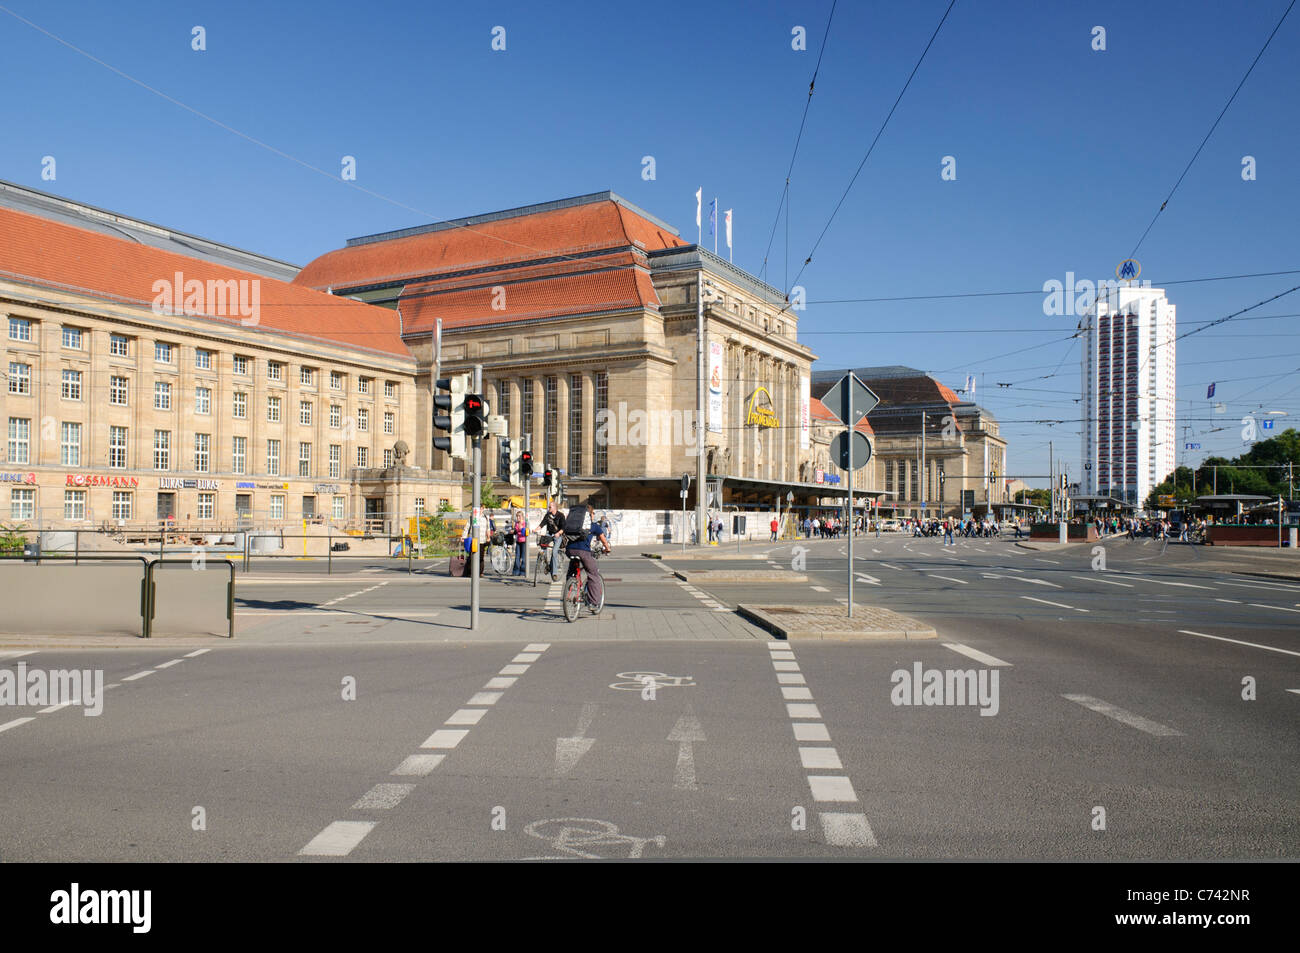 Central railway station, Leipzig, Saxony, Germany, Europe Stock Photo